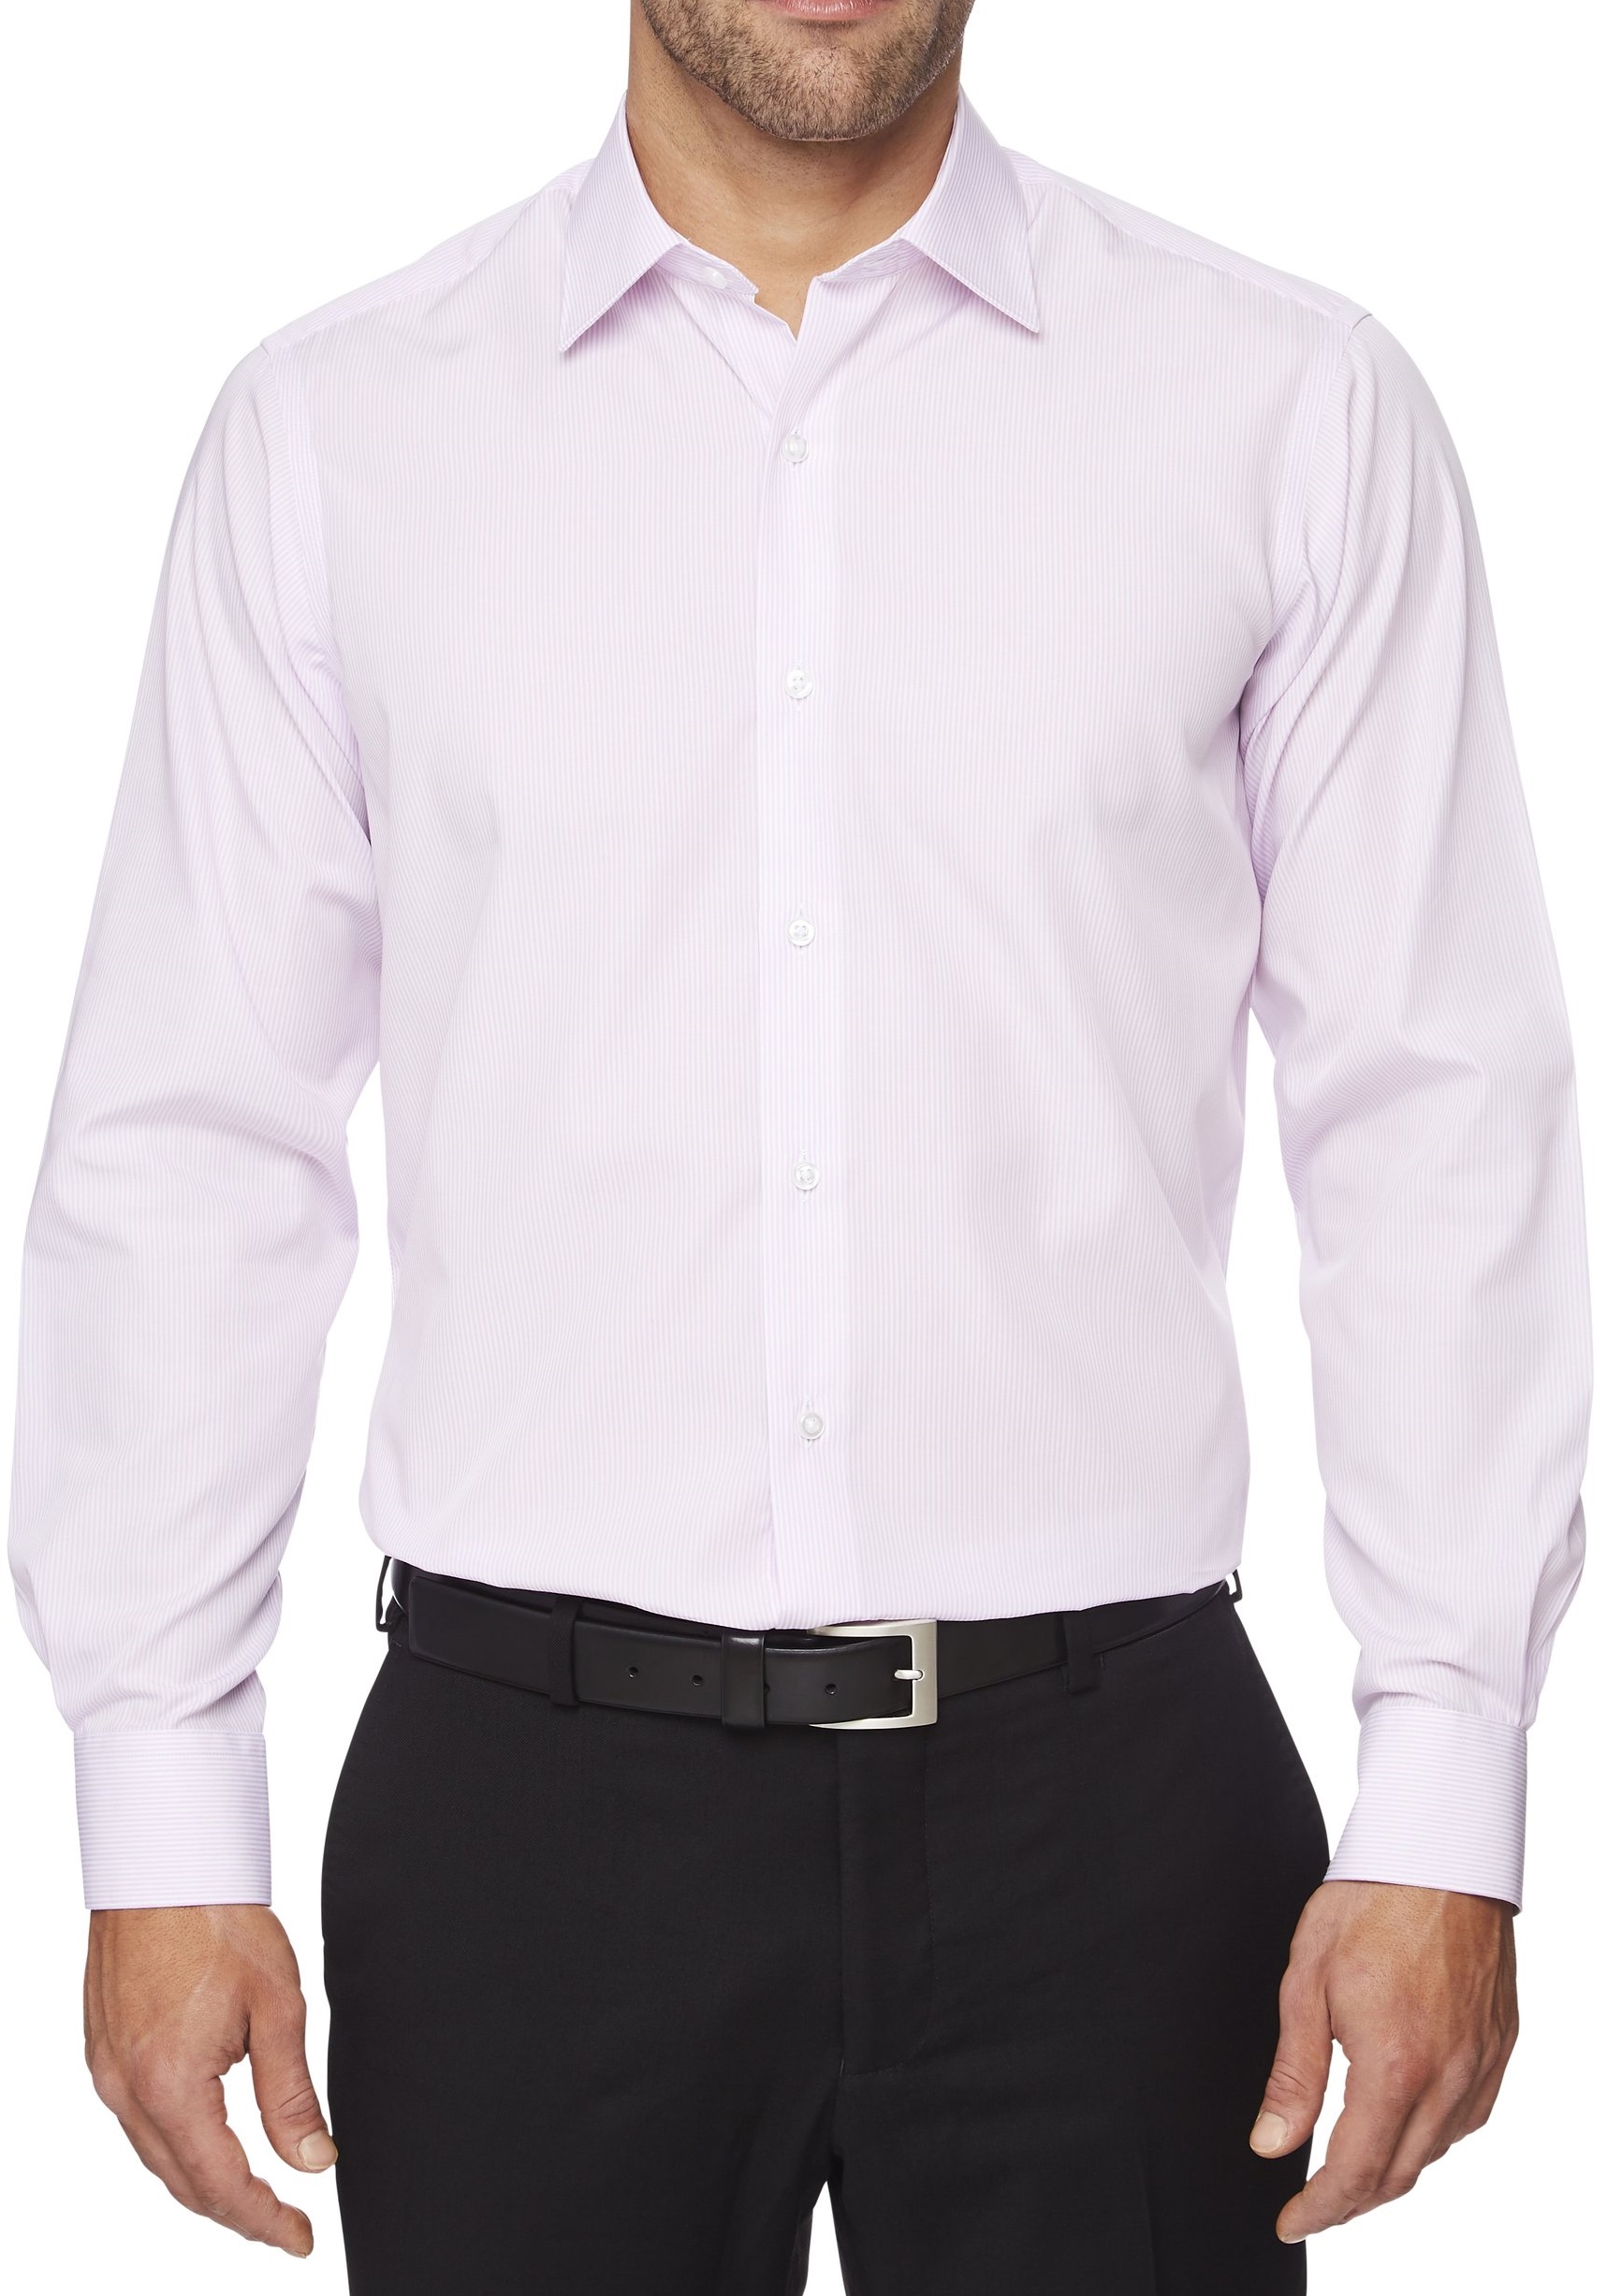 Ganton Shirts Essentials City Tailored Fit Business Shirts Online